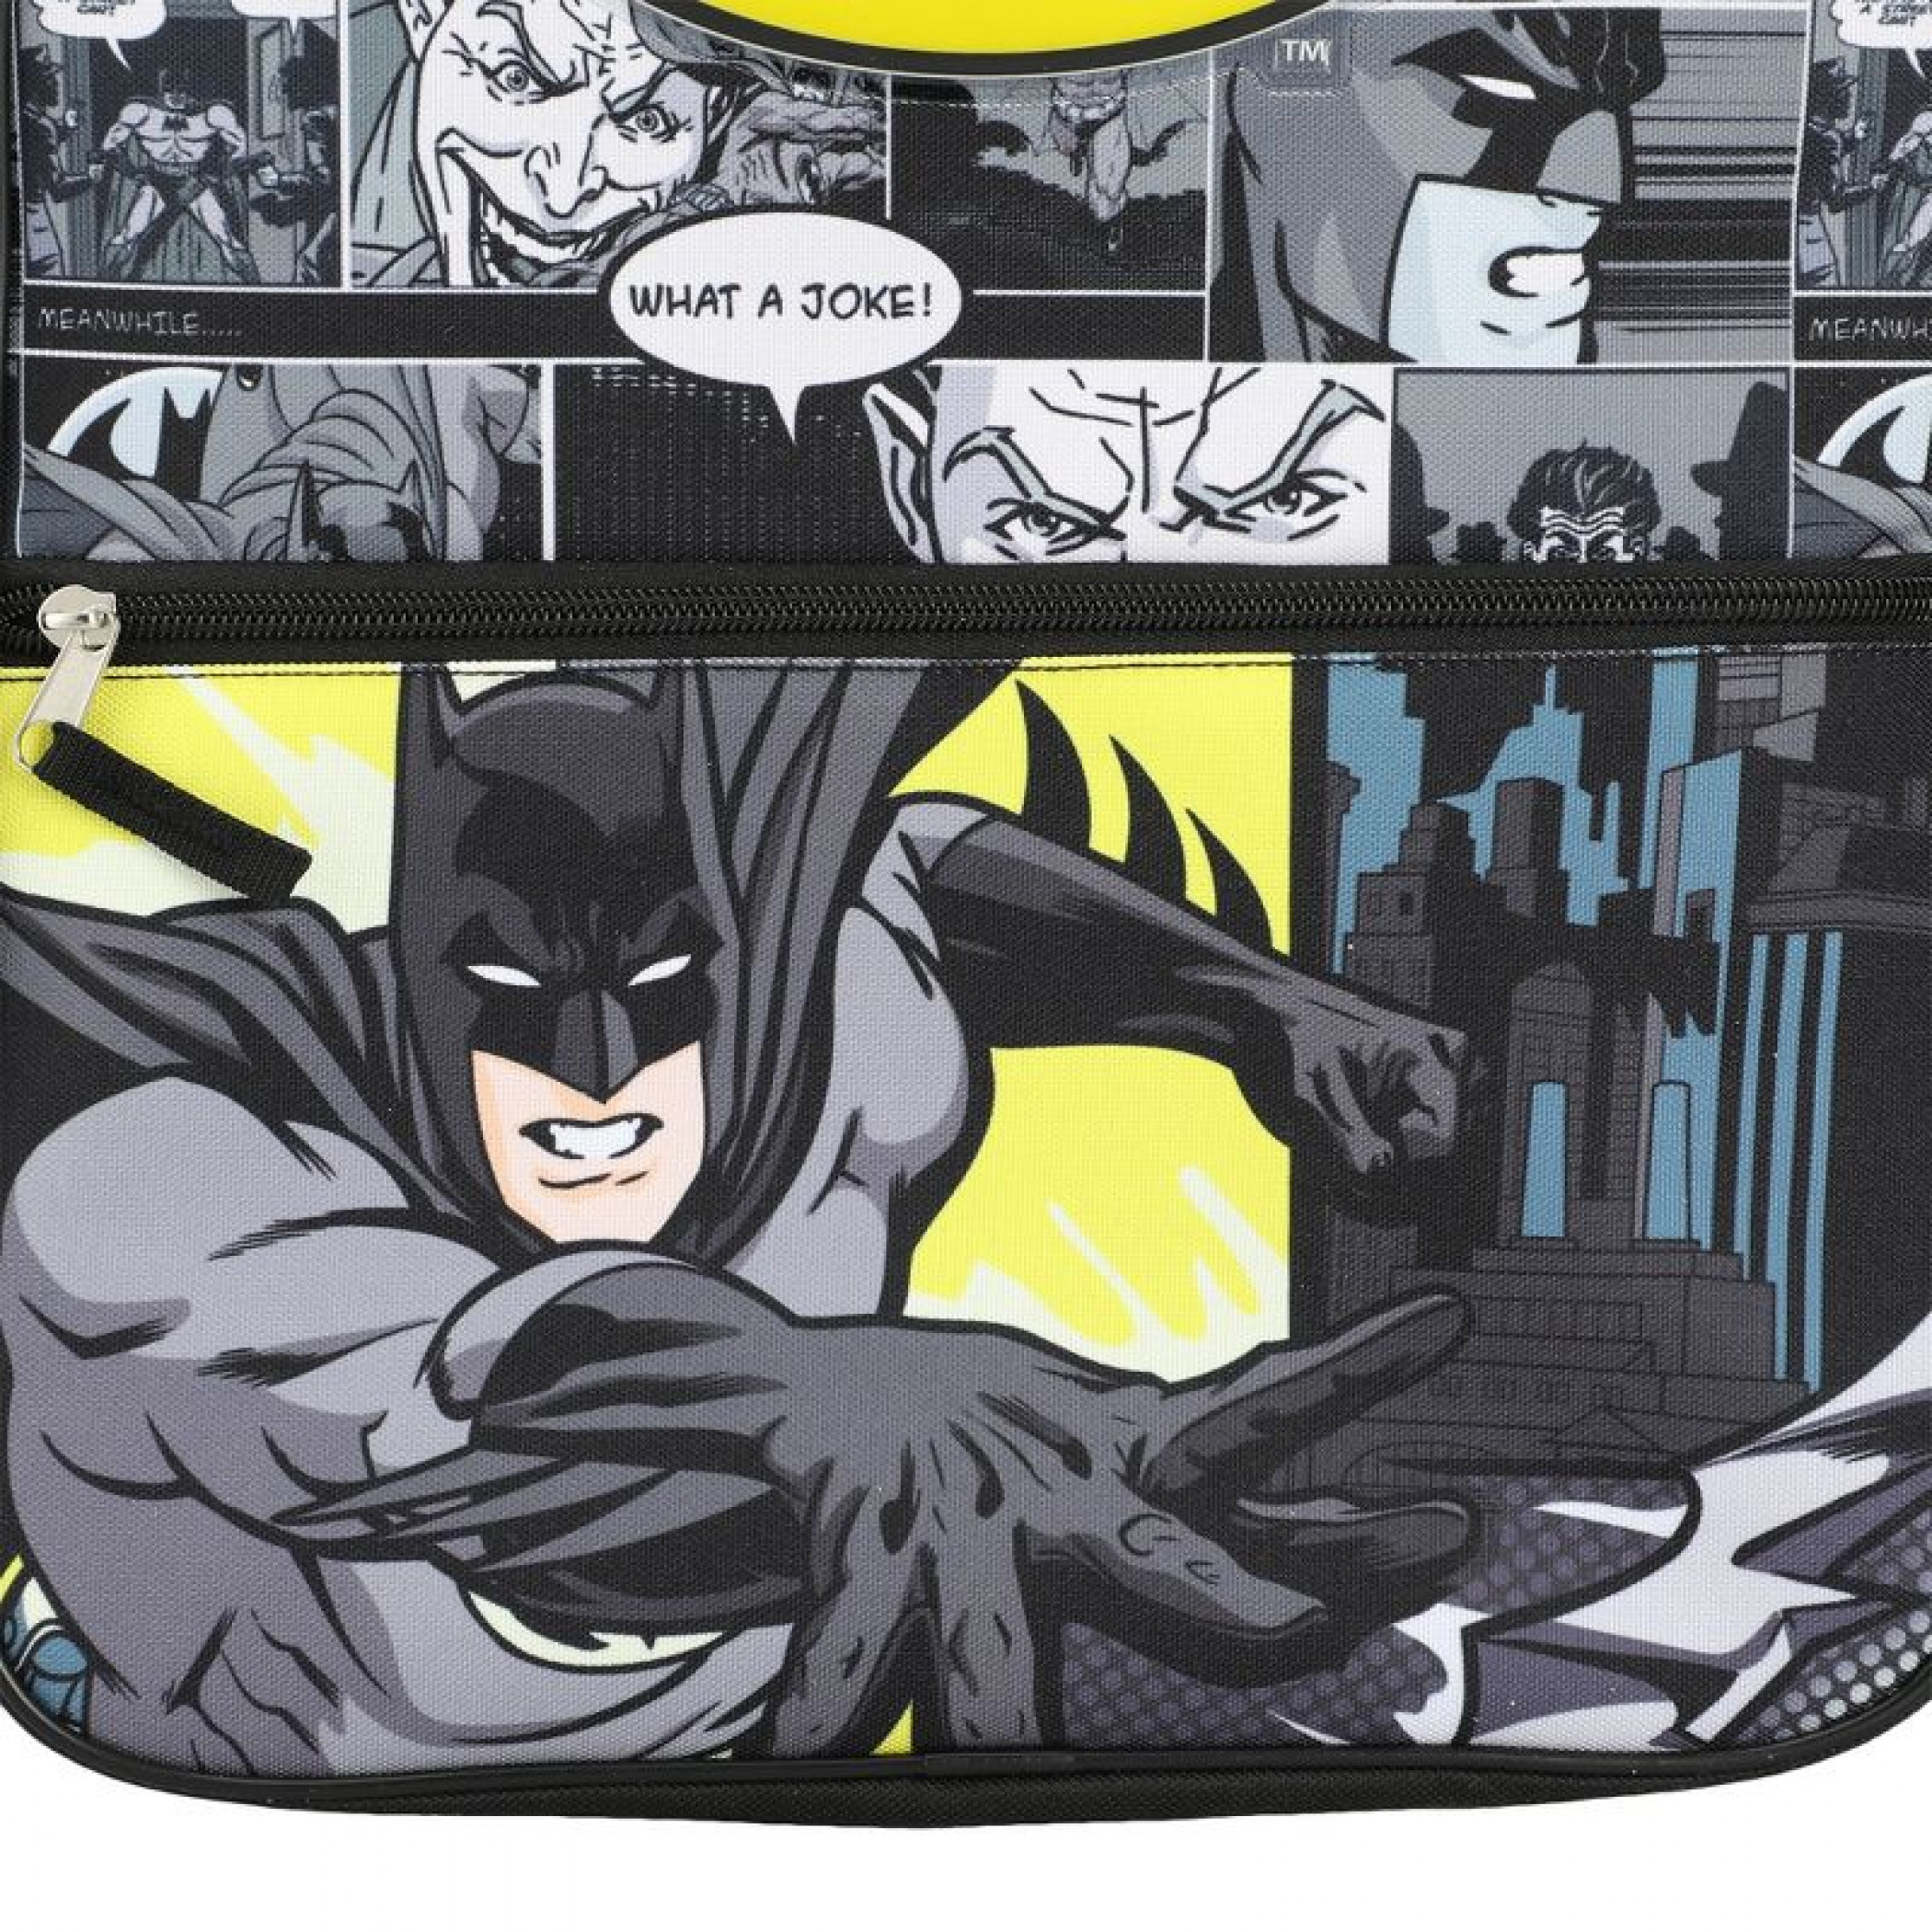 Batman Hooded Kids Backpack